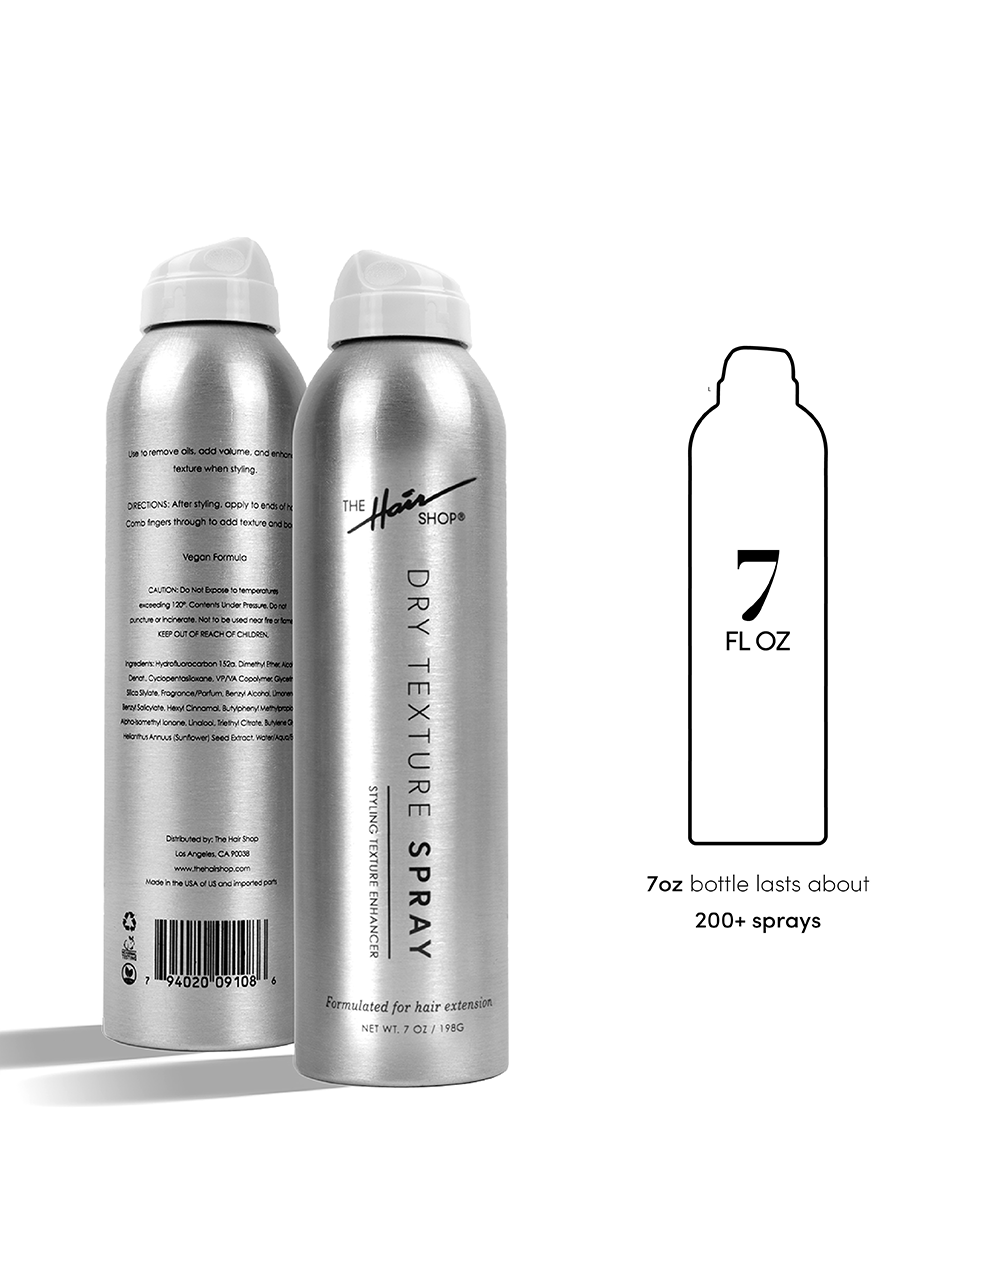  Dry Texture Spray. 7 fl oz bottle last about 200+ sprays